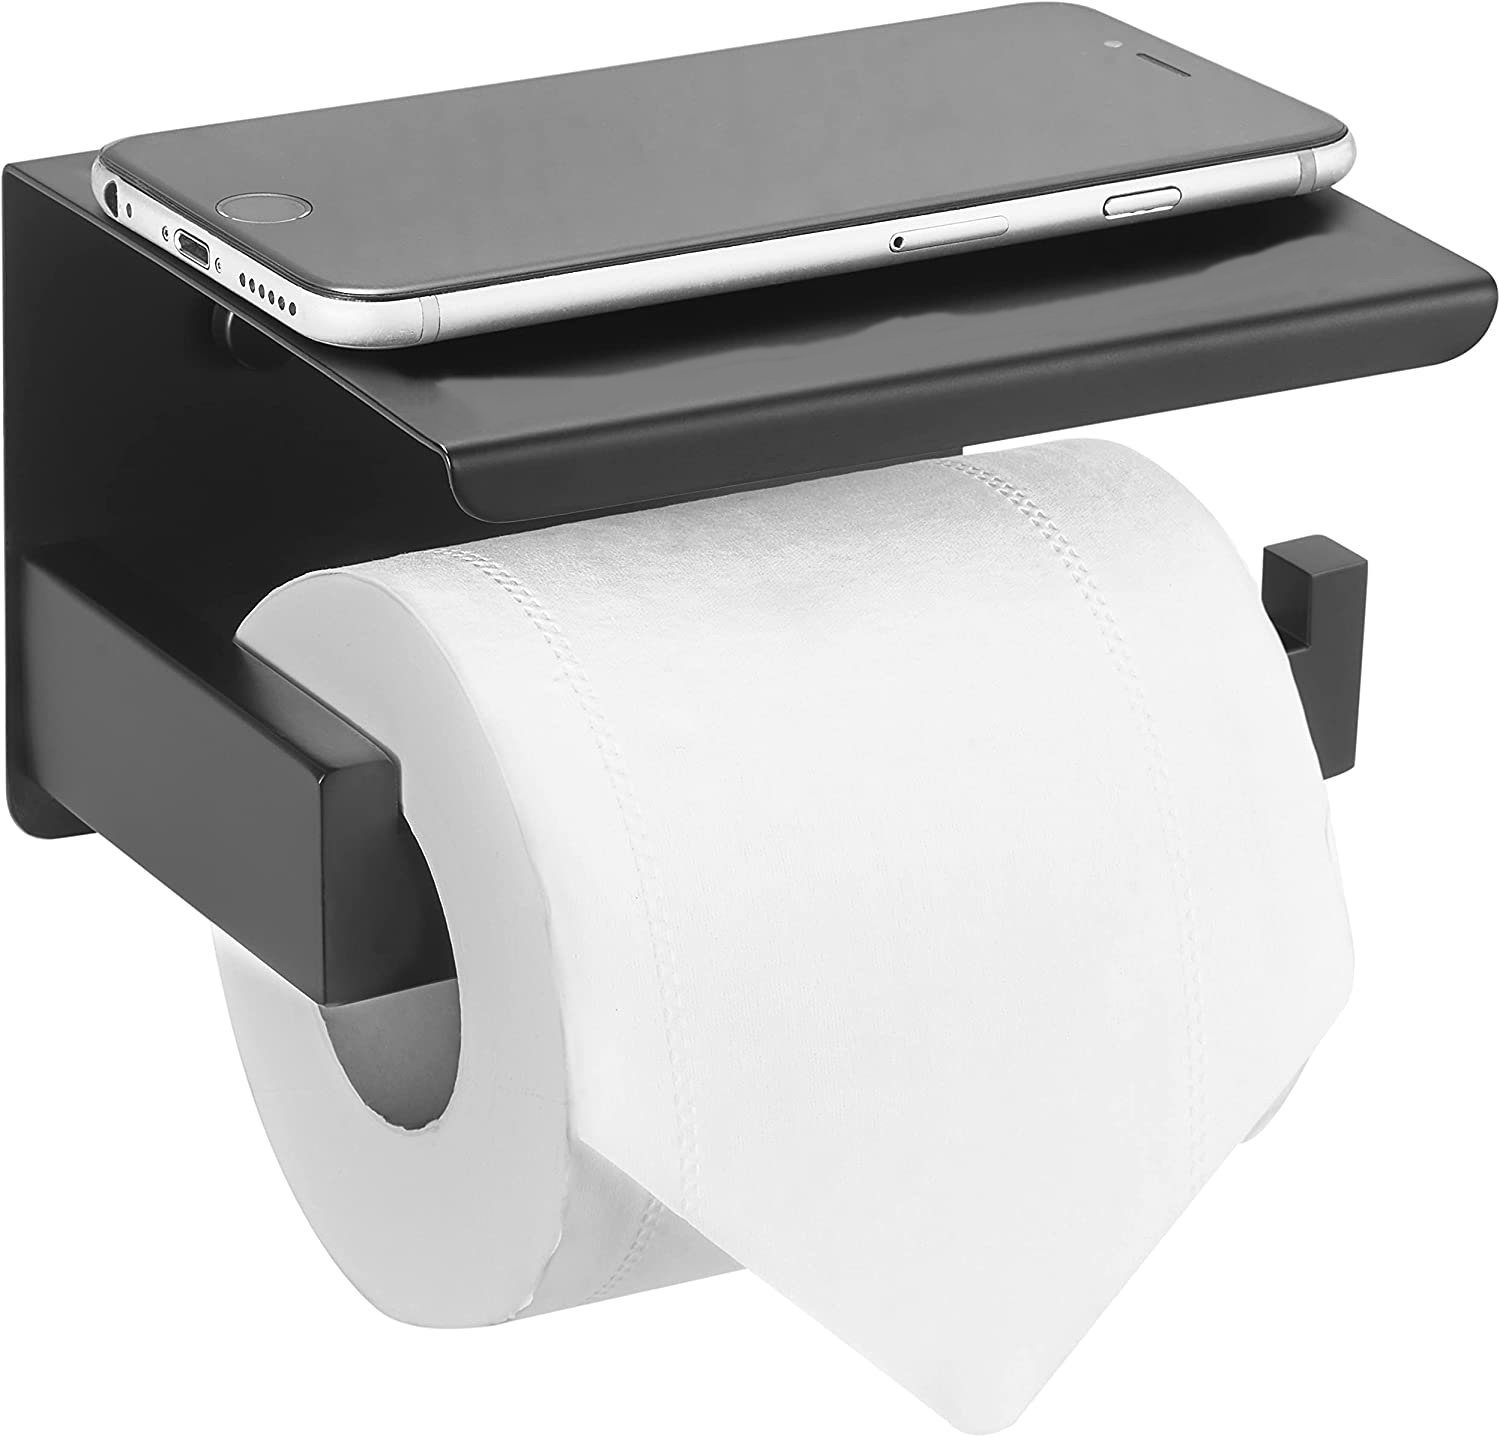 Selbstklebend Toilettenpapierhalter Edelstahl Toilettenpapierhalter ZAXSD Wandmontage Klopapierhalter, Bohren, Ohne Klorollenhalter